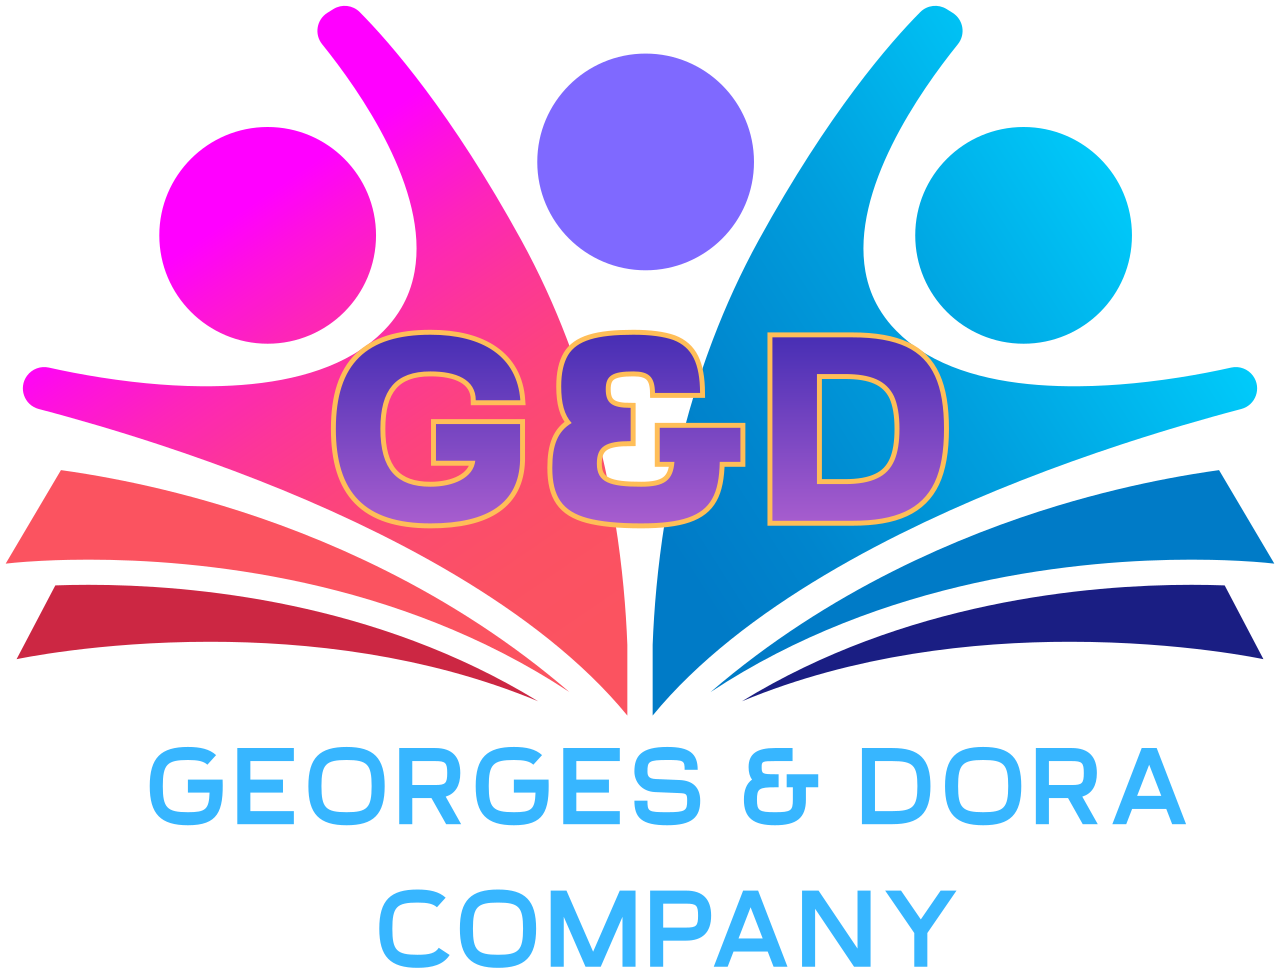 www.gnd.org's logo